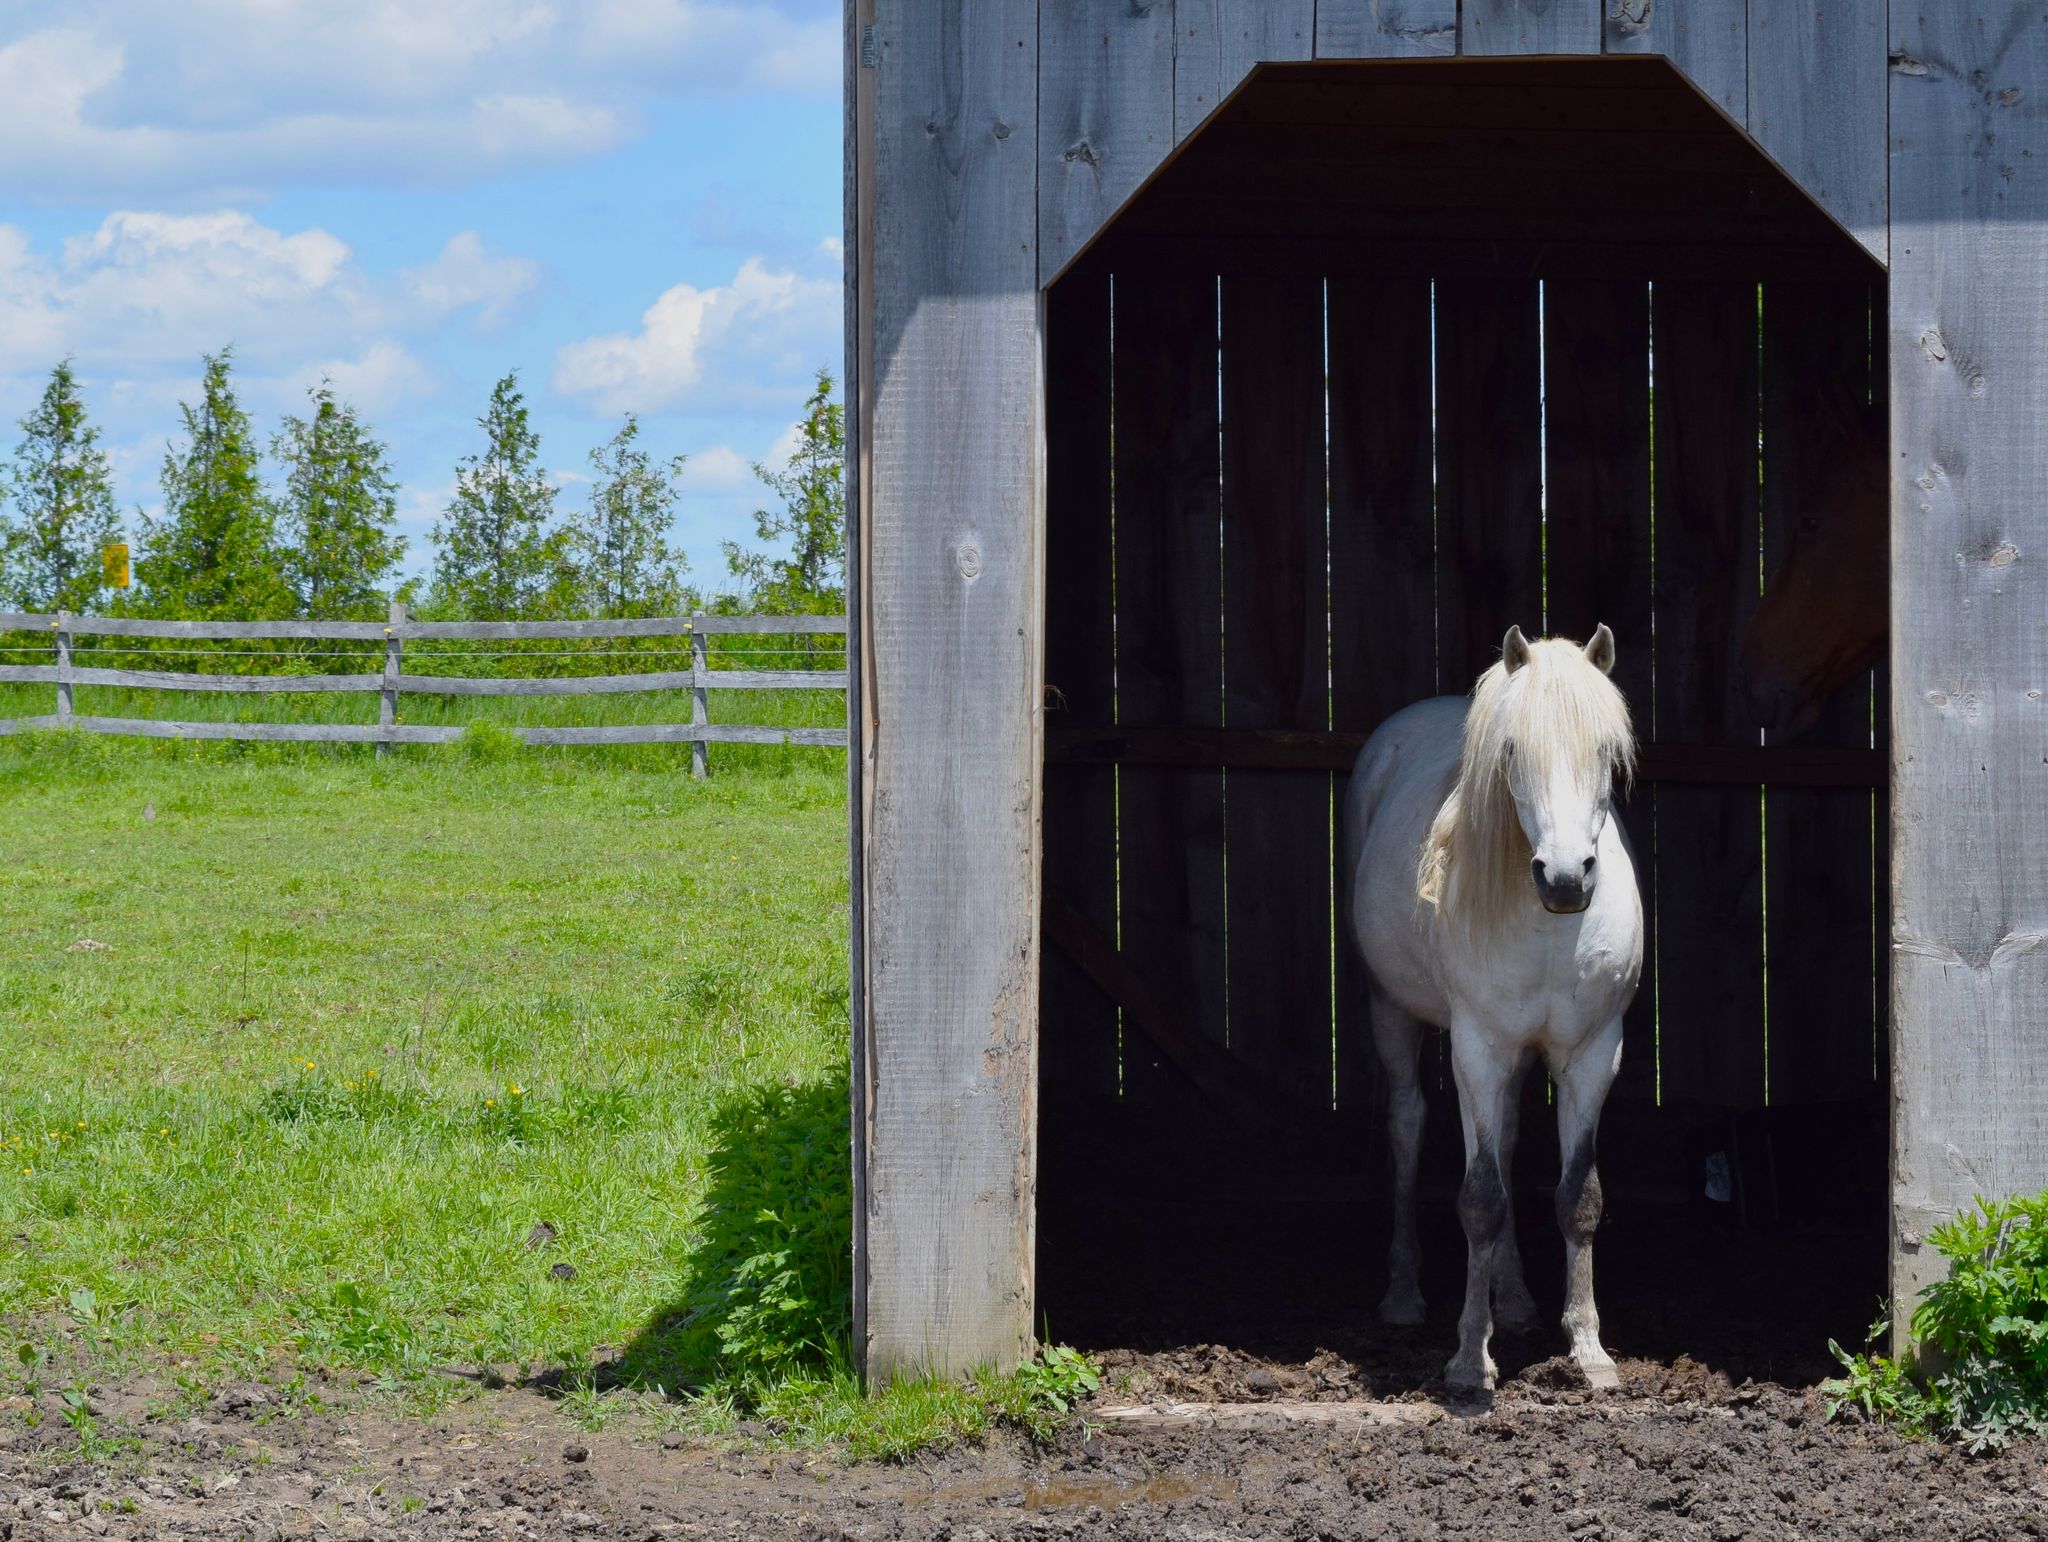 White Welsh pony in shelter doorway